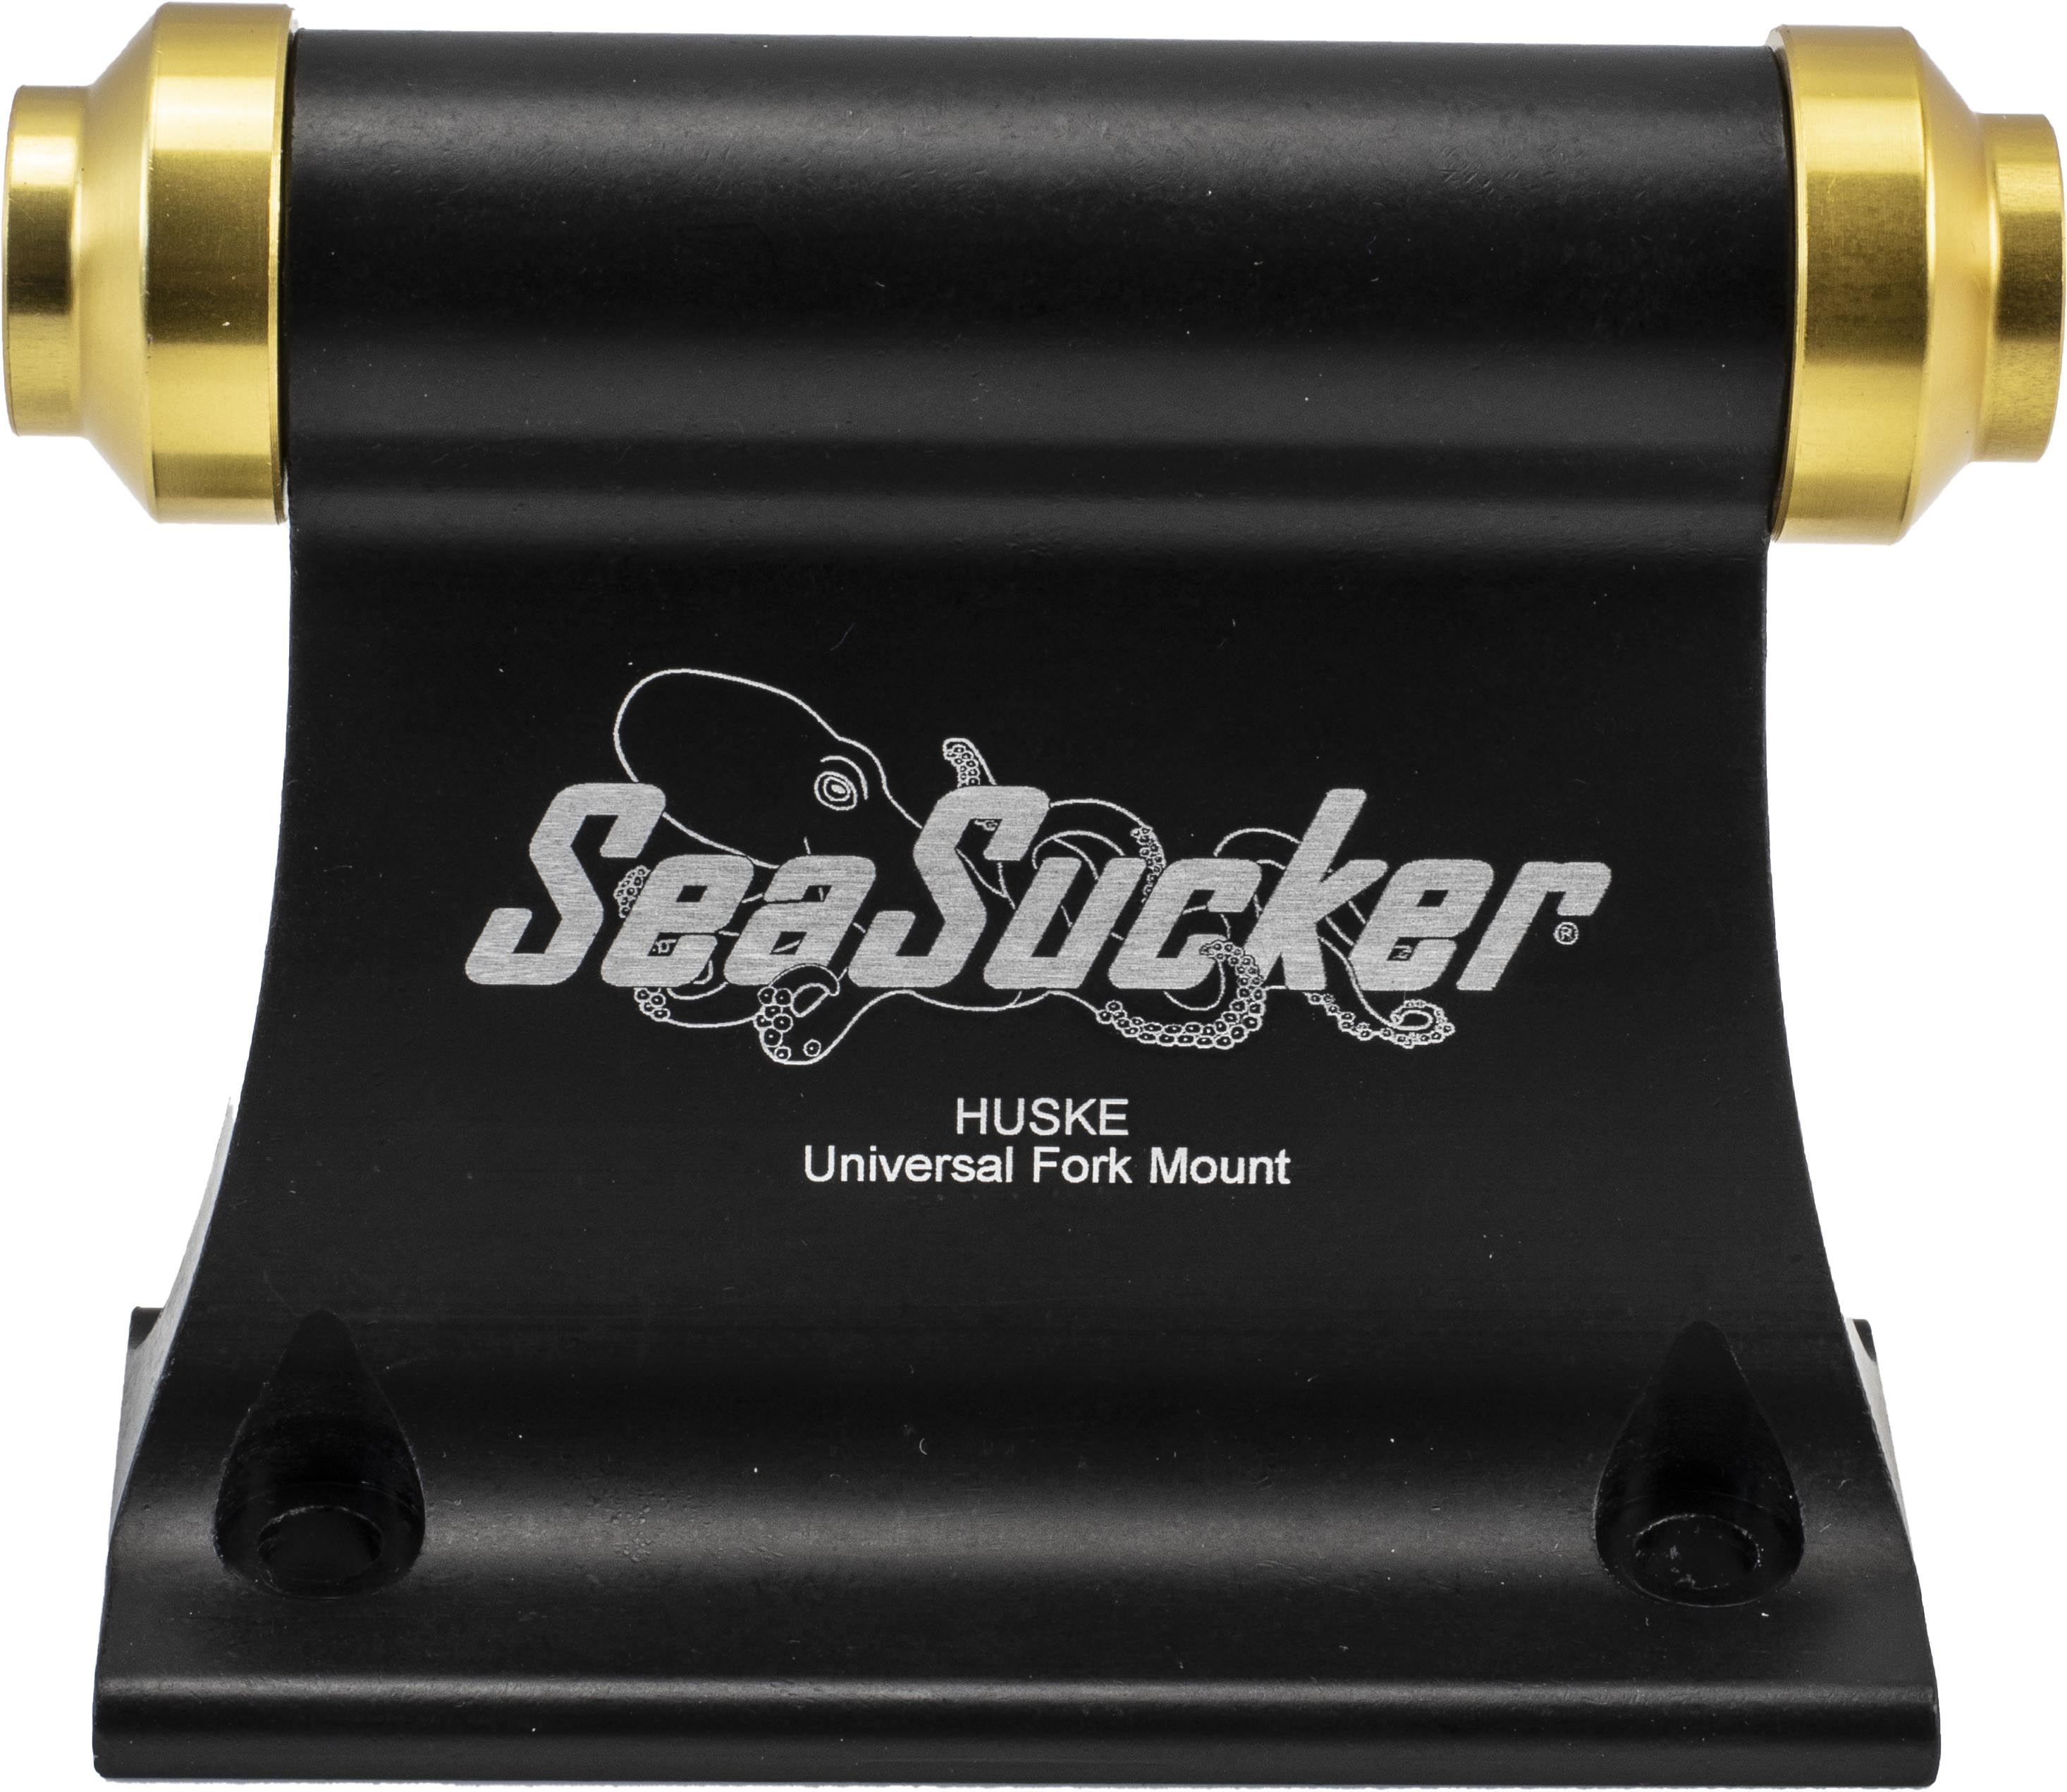 SeaSucker HUSKE with 15 mm x 110 mm Through Axle Plugs installed